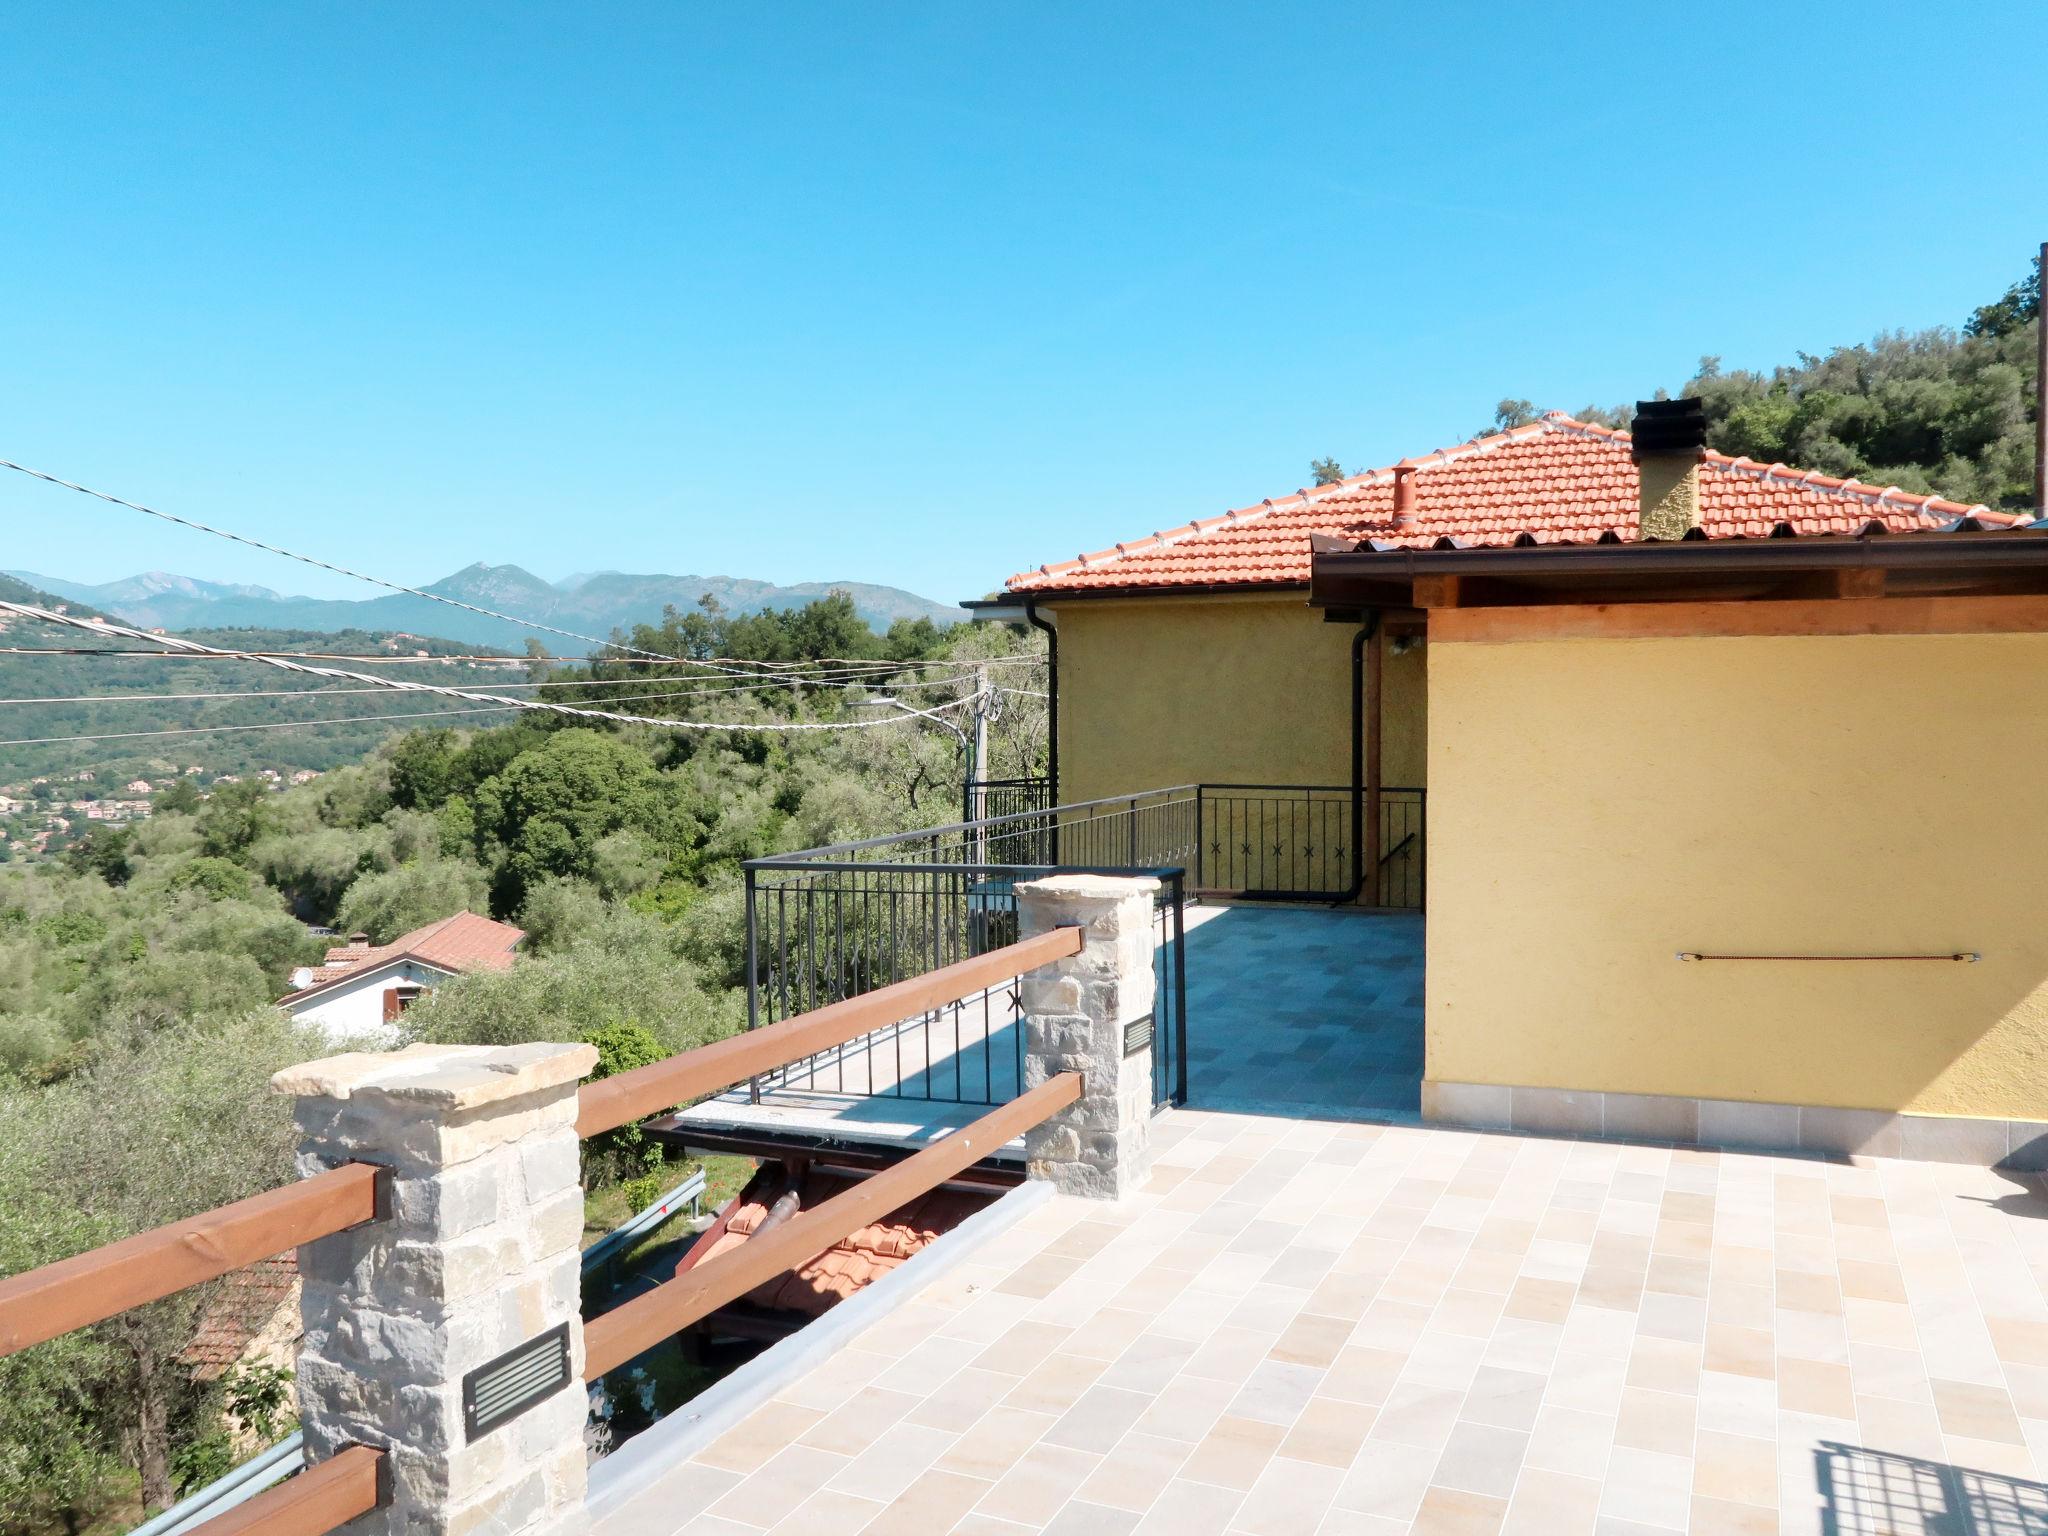 Photo 1 - Appartement de 2 chambres à Villanova d'Albenga avec jardin et vues à la mer